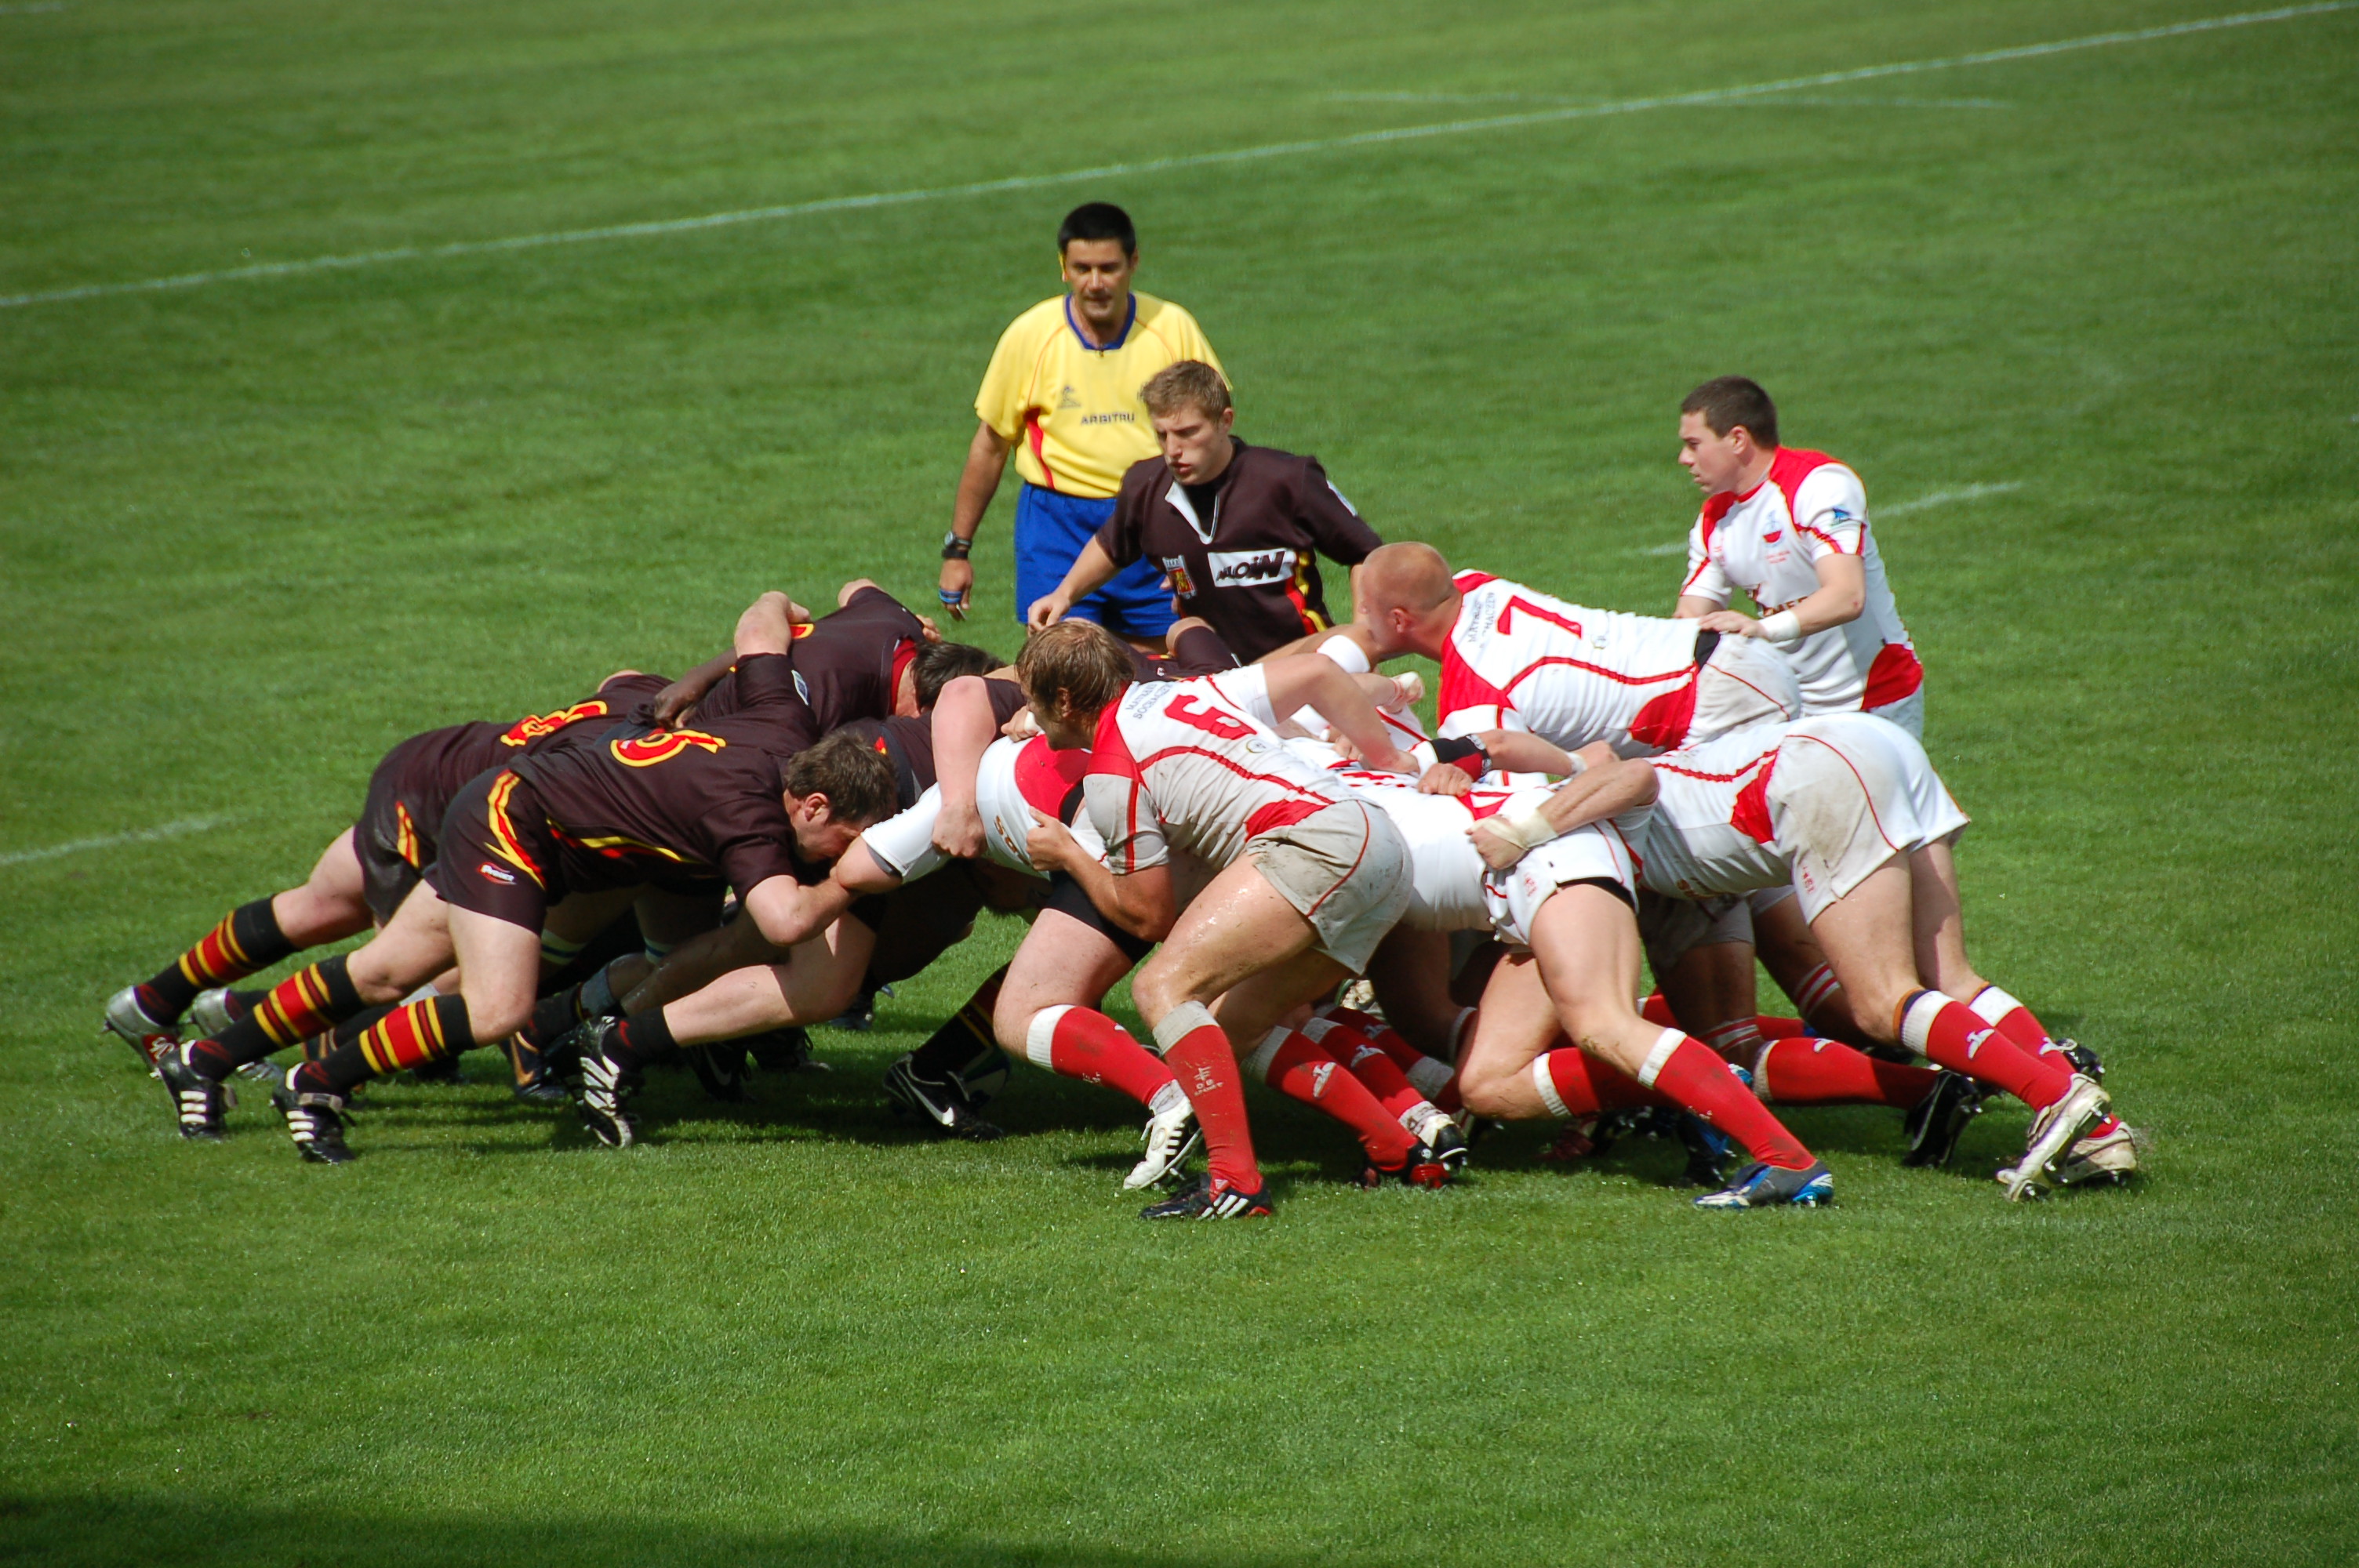 file-poland-vs-belgium-2009-rugby-2-jpg-wikimedia-commons